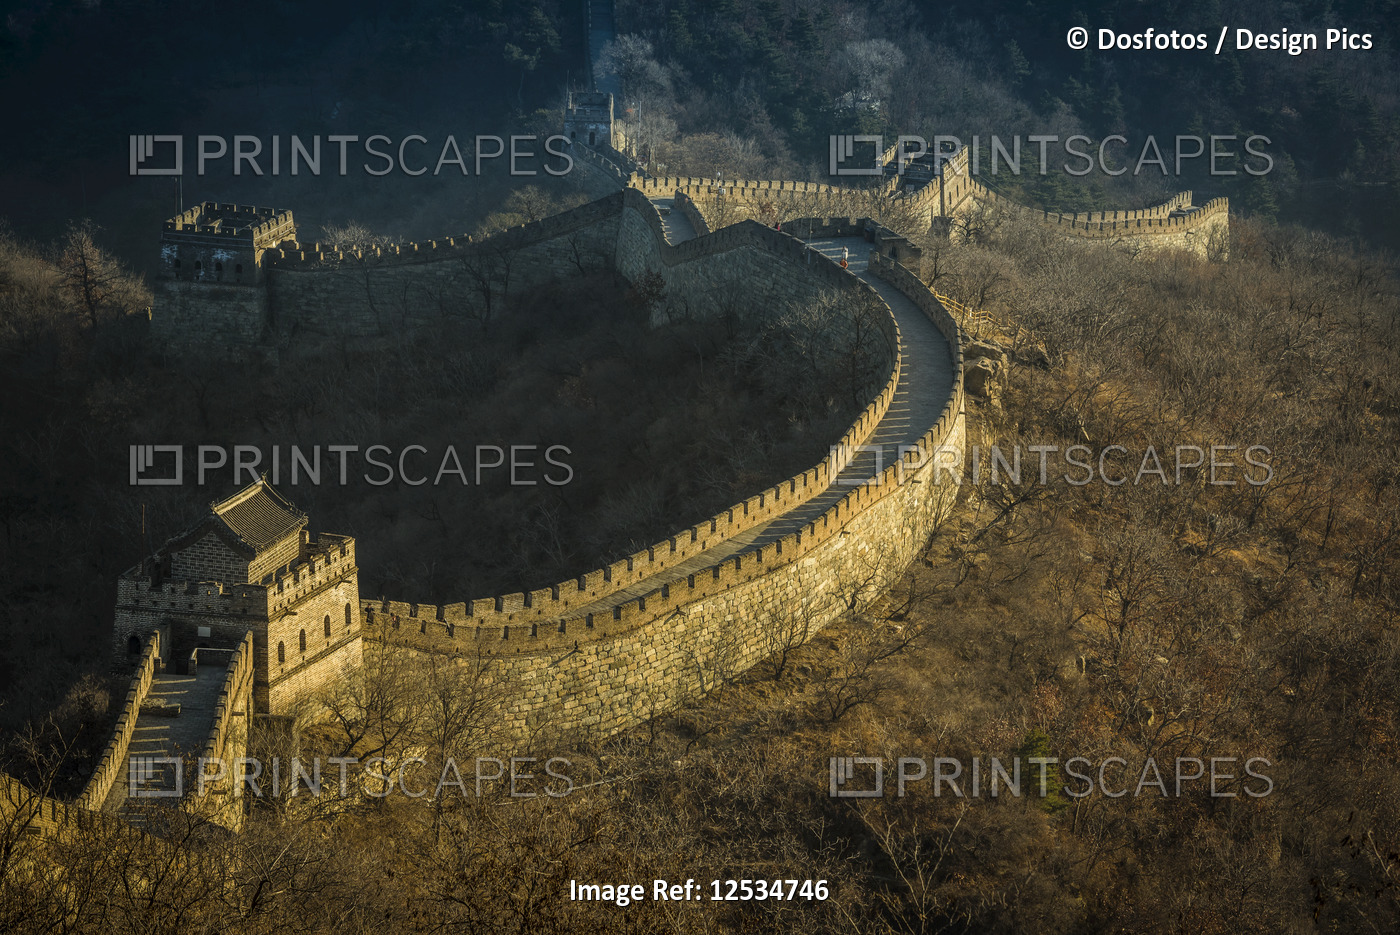 The Great Wall of China; Mutianyu, Huairou County, China